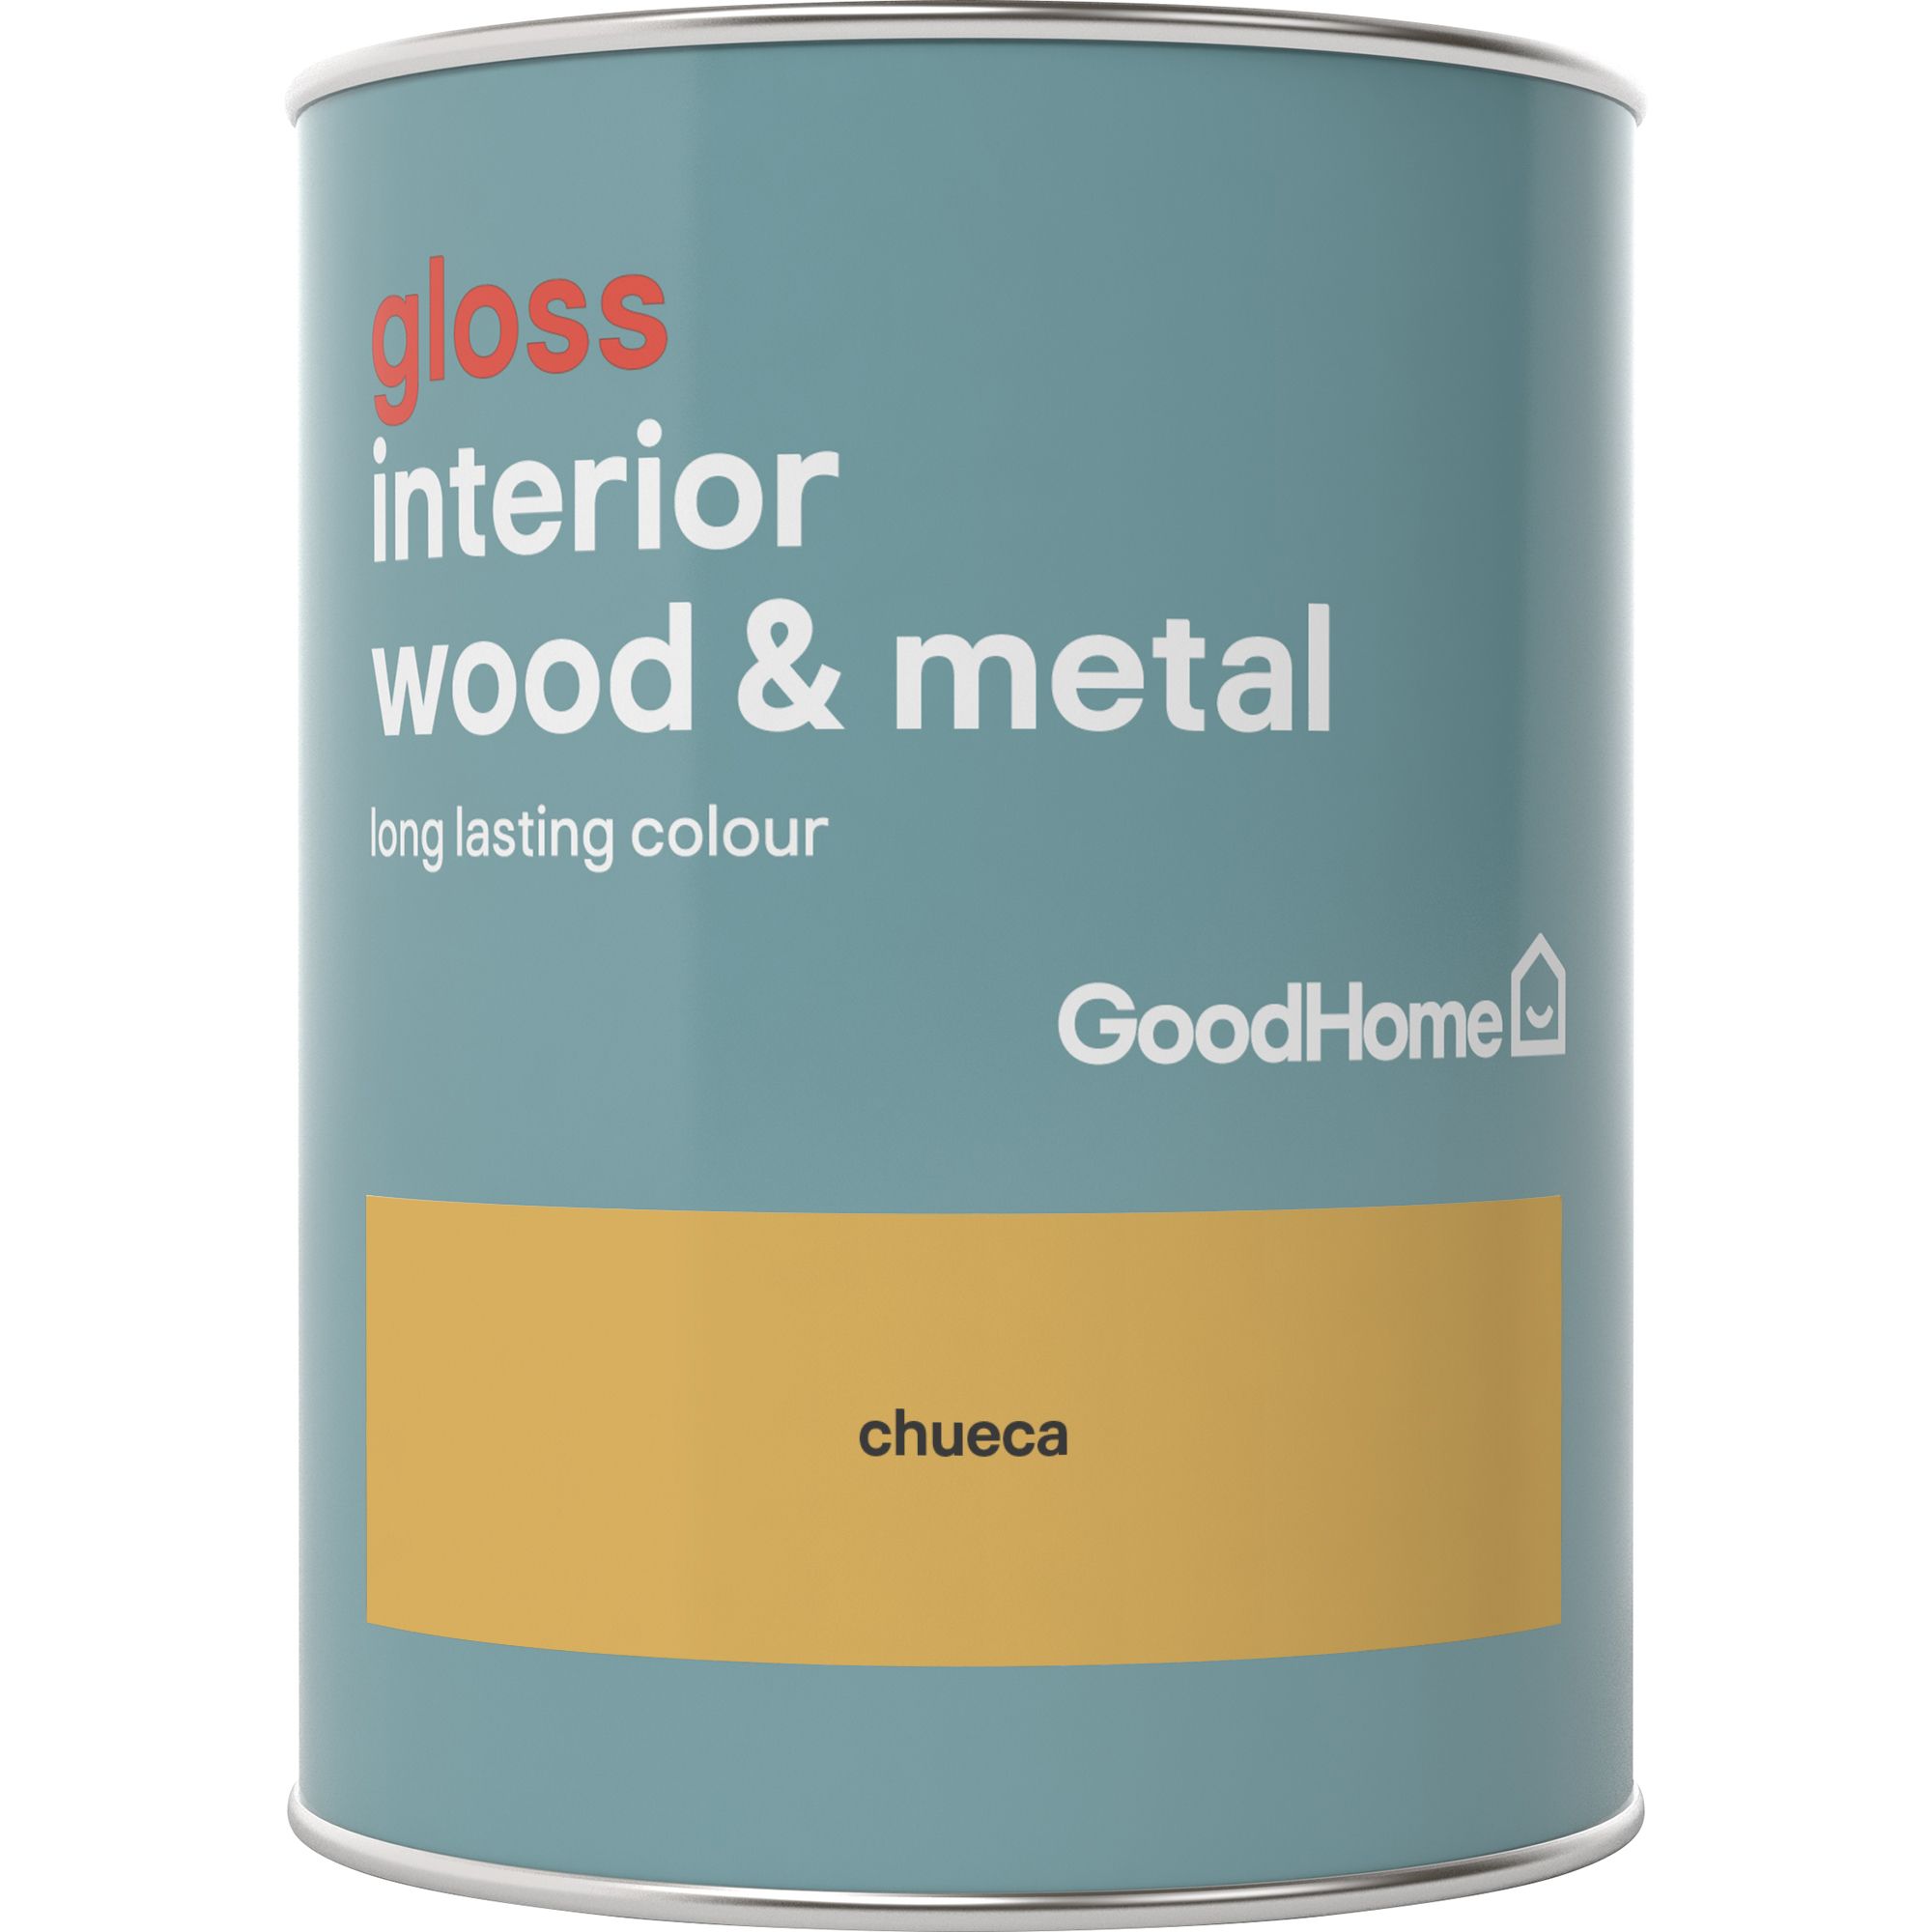 GoodHome Chueca Gloss Metal & wood paint, 750ml